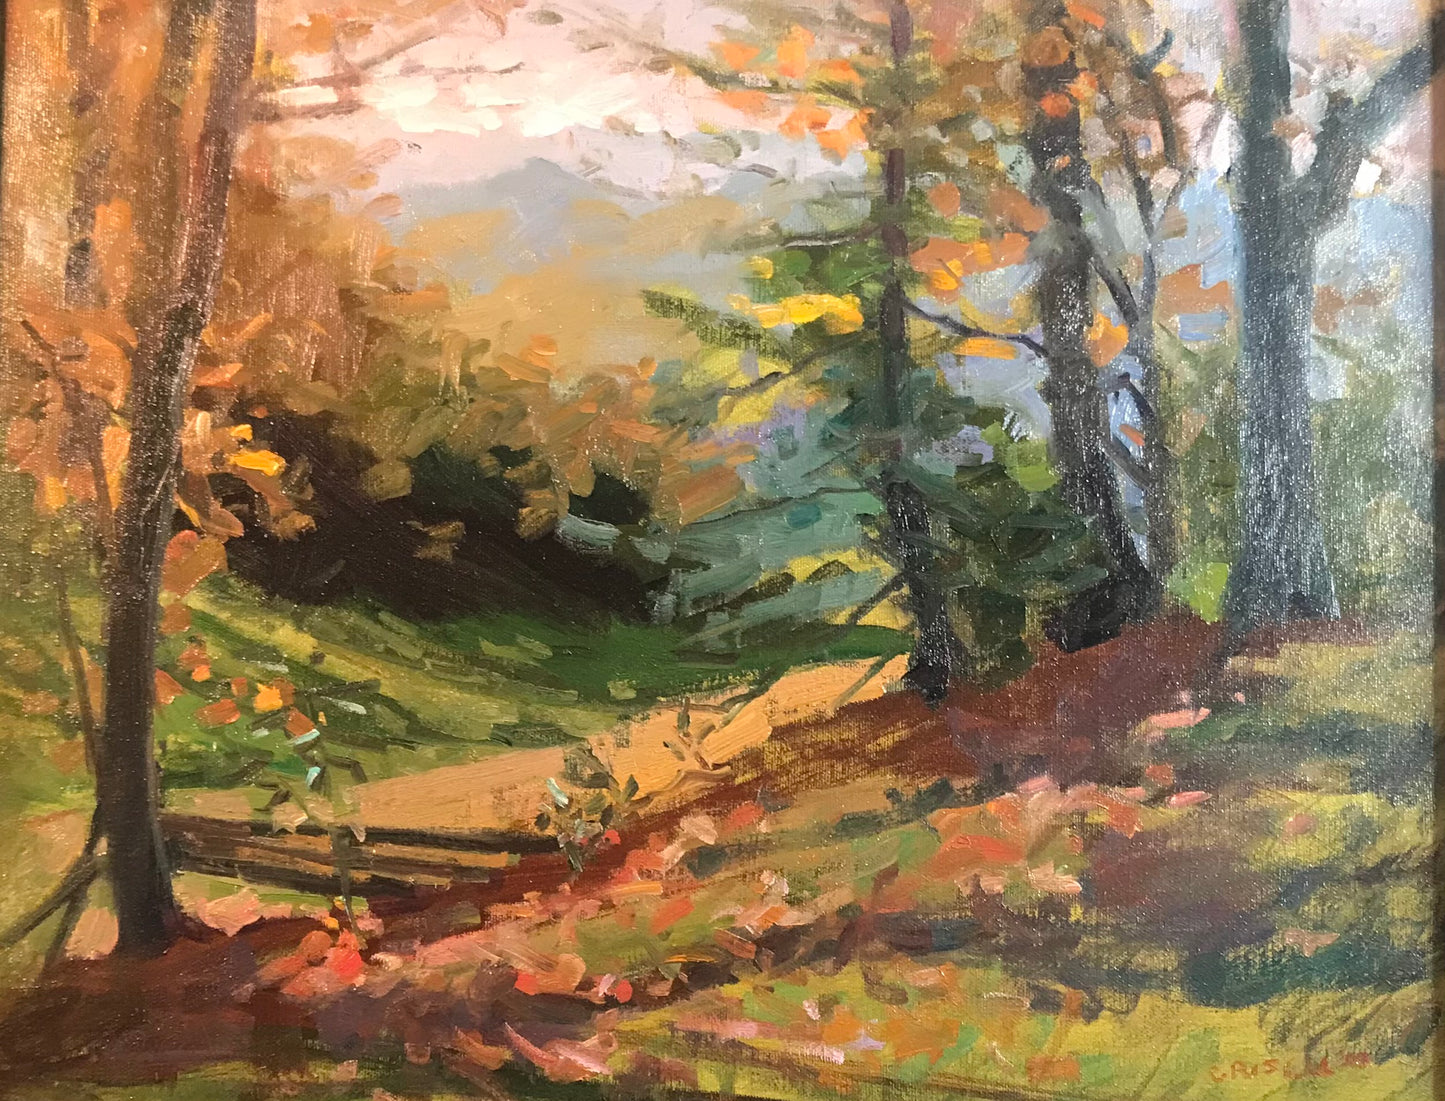 Appalachian Landscape (16 x 20 Inches)